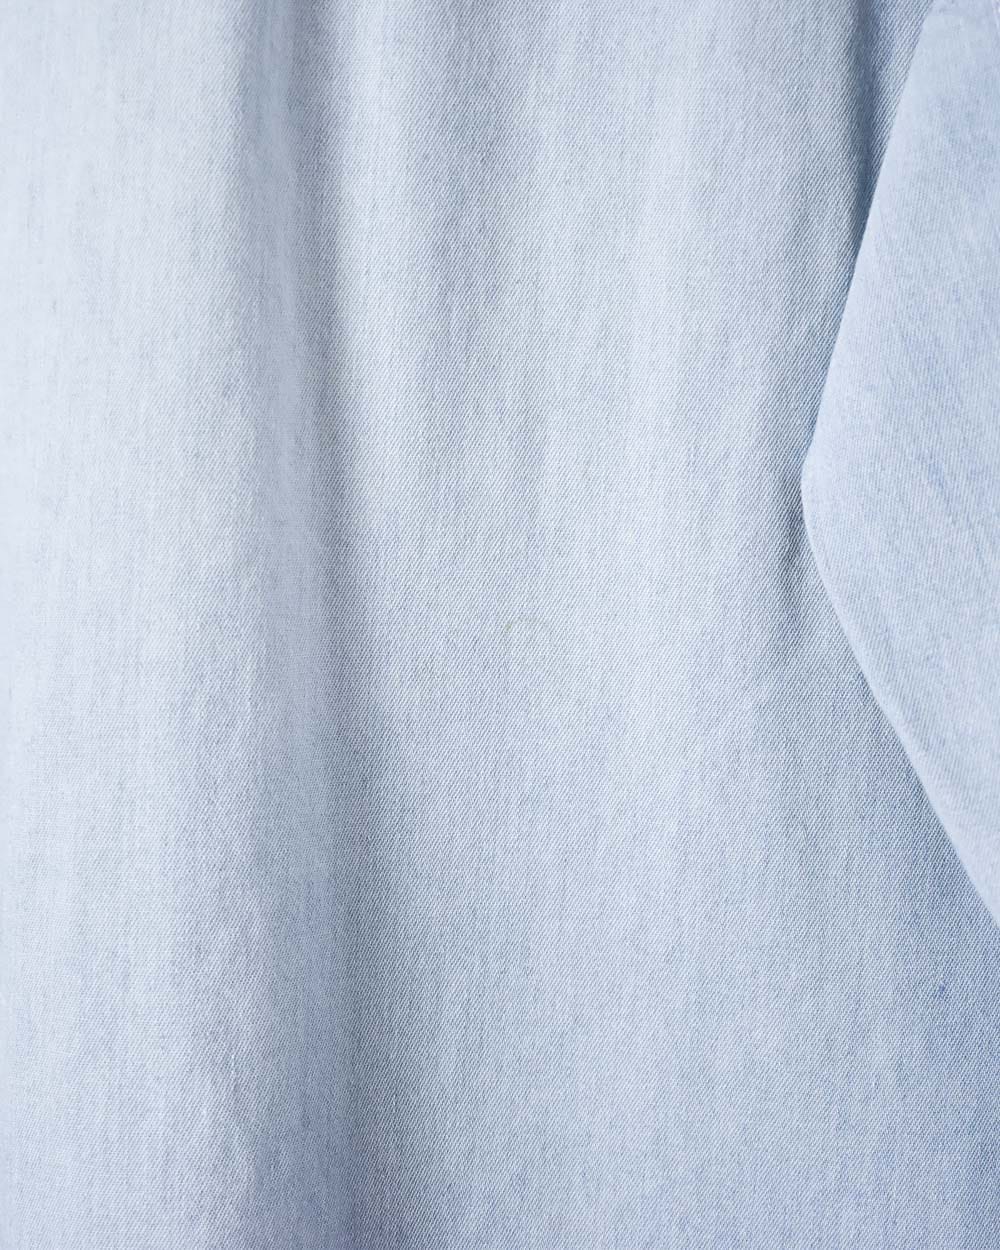 BabyBlue Levi's Denim Shirt - Small